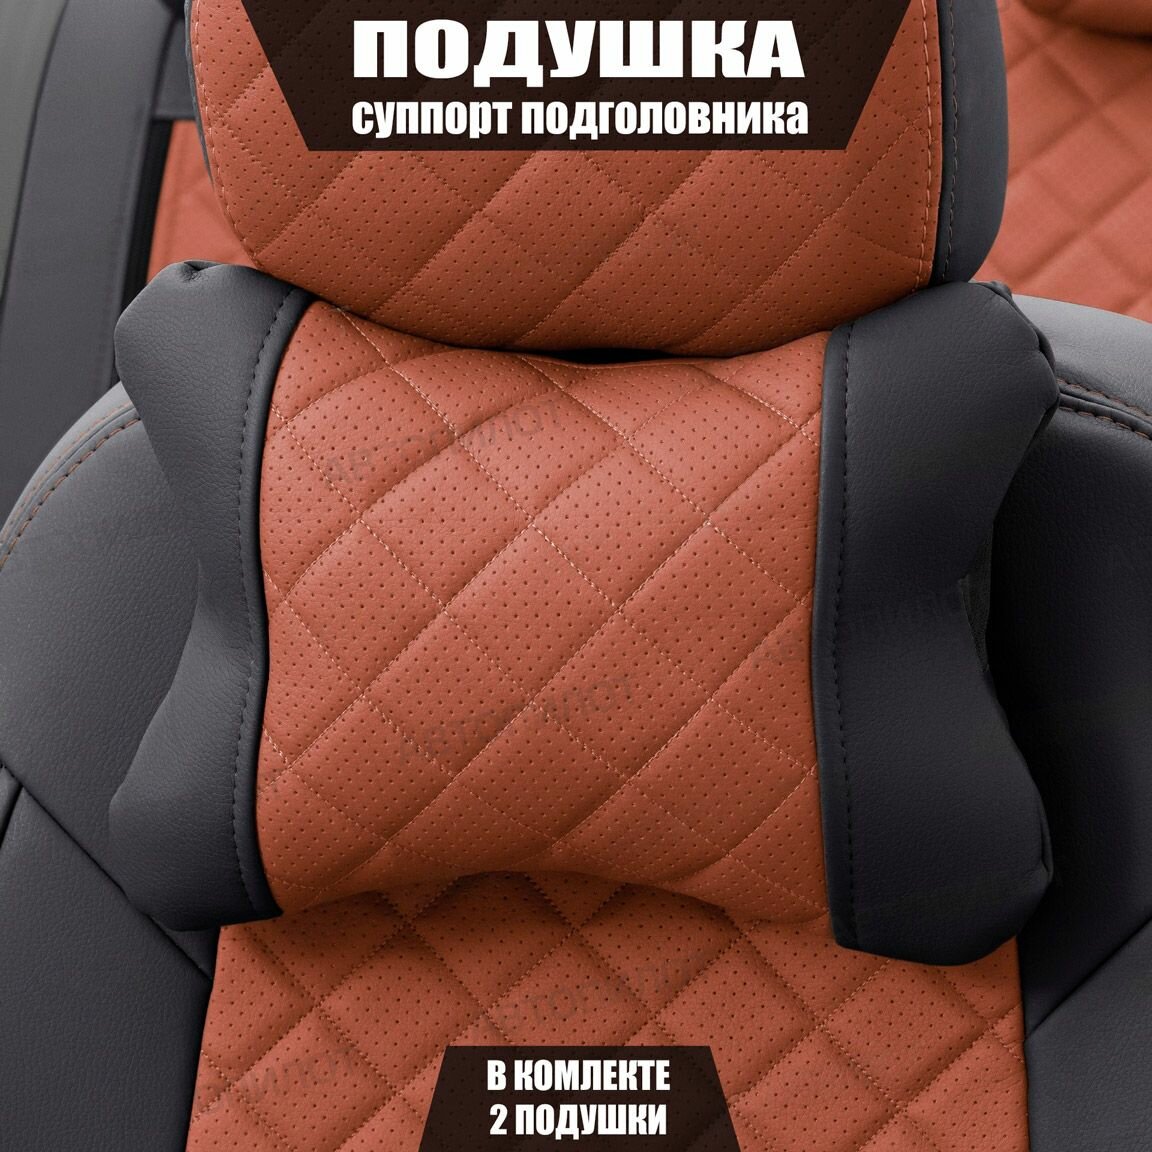 Подушки под шею (суппорт подголовника) для Мазда мкс-5 (2005 - 2008) родстер / Mazda MX-5 Ромб Экокожа 2 подушки Черный